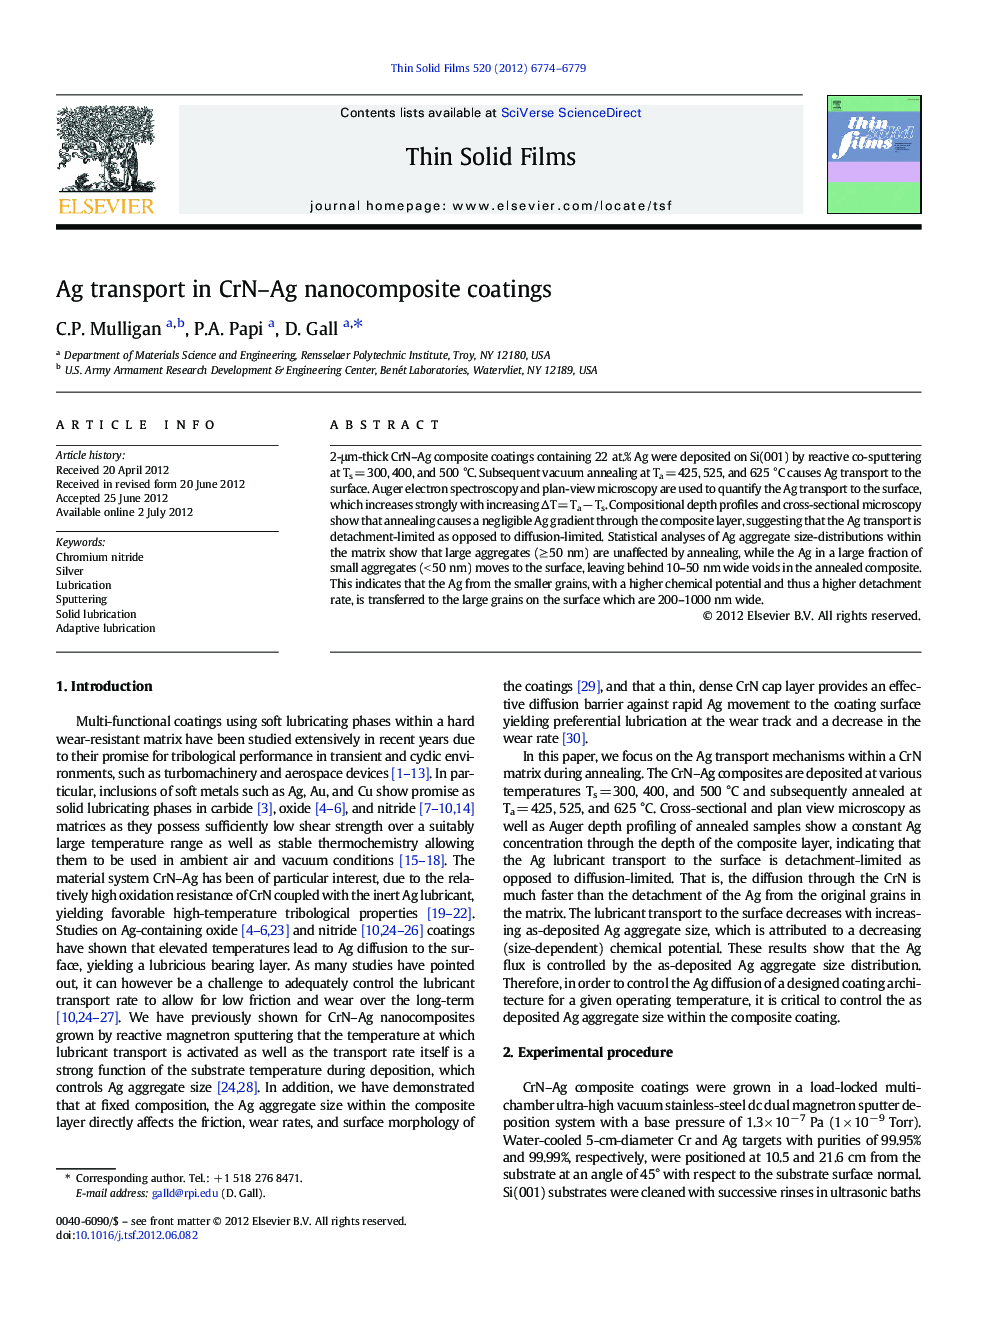 Ag transport in CrN–Ag nanocomposite coatings